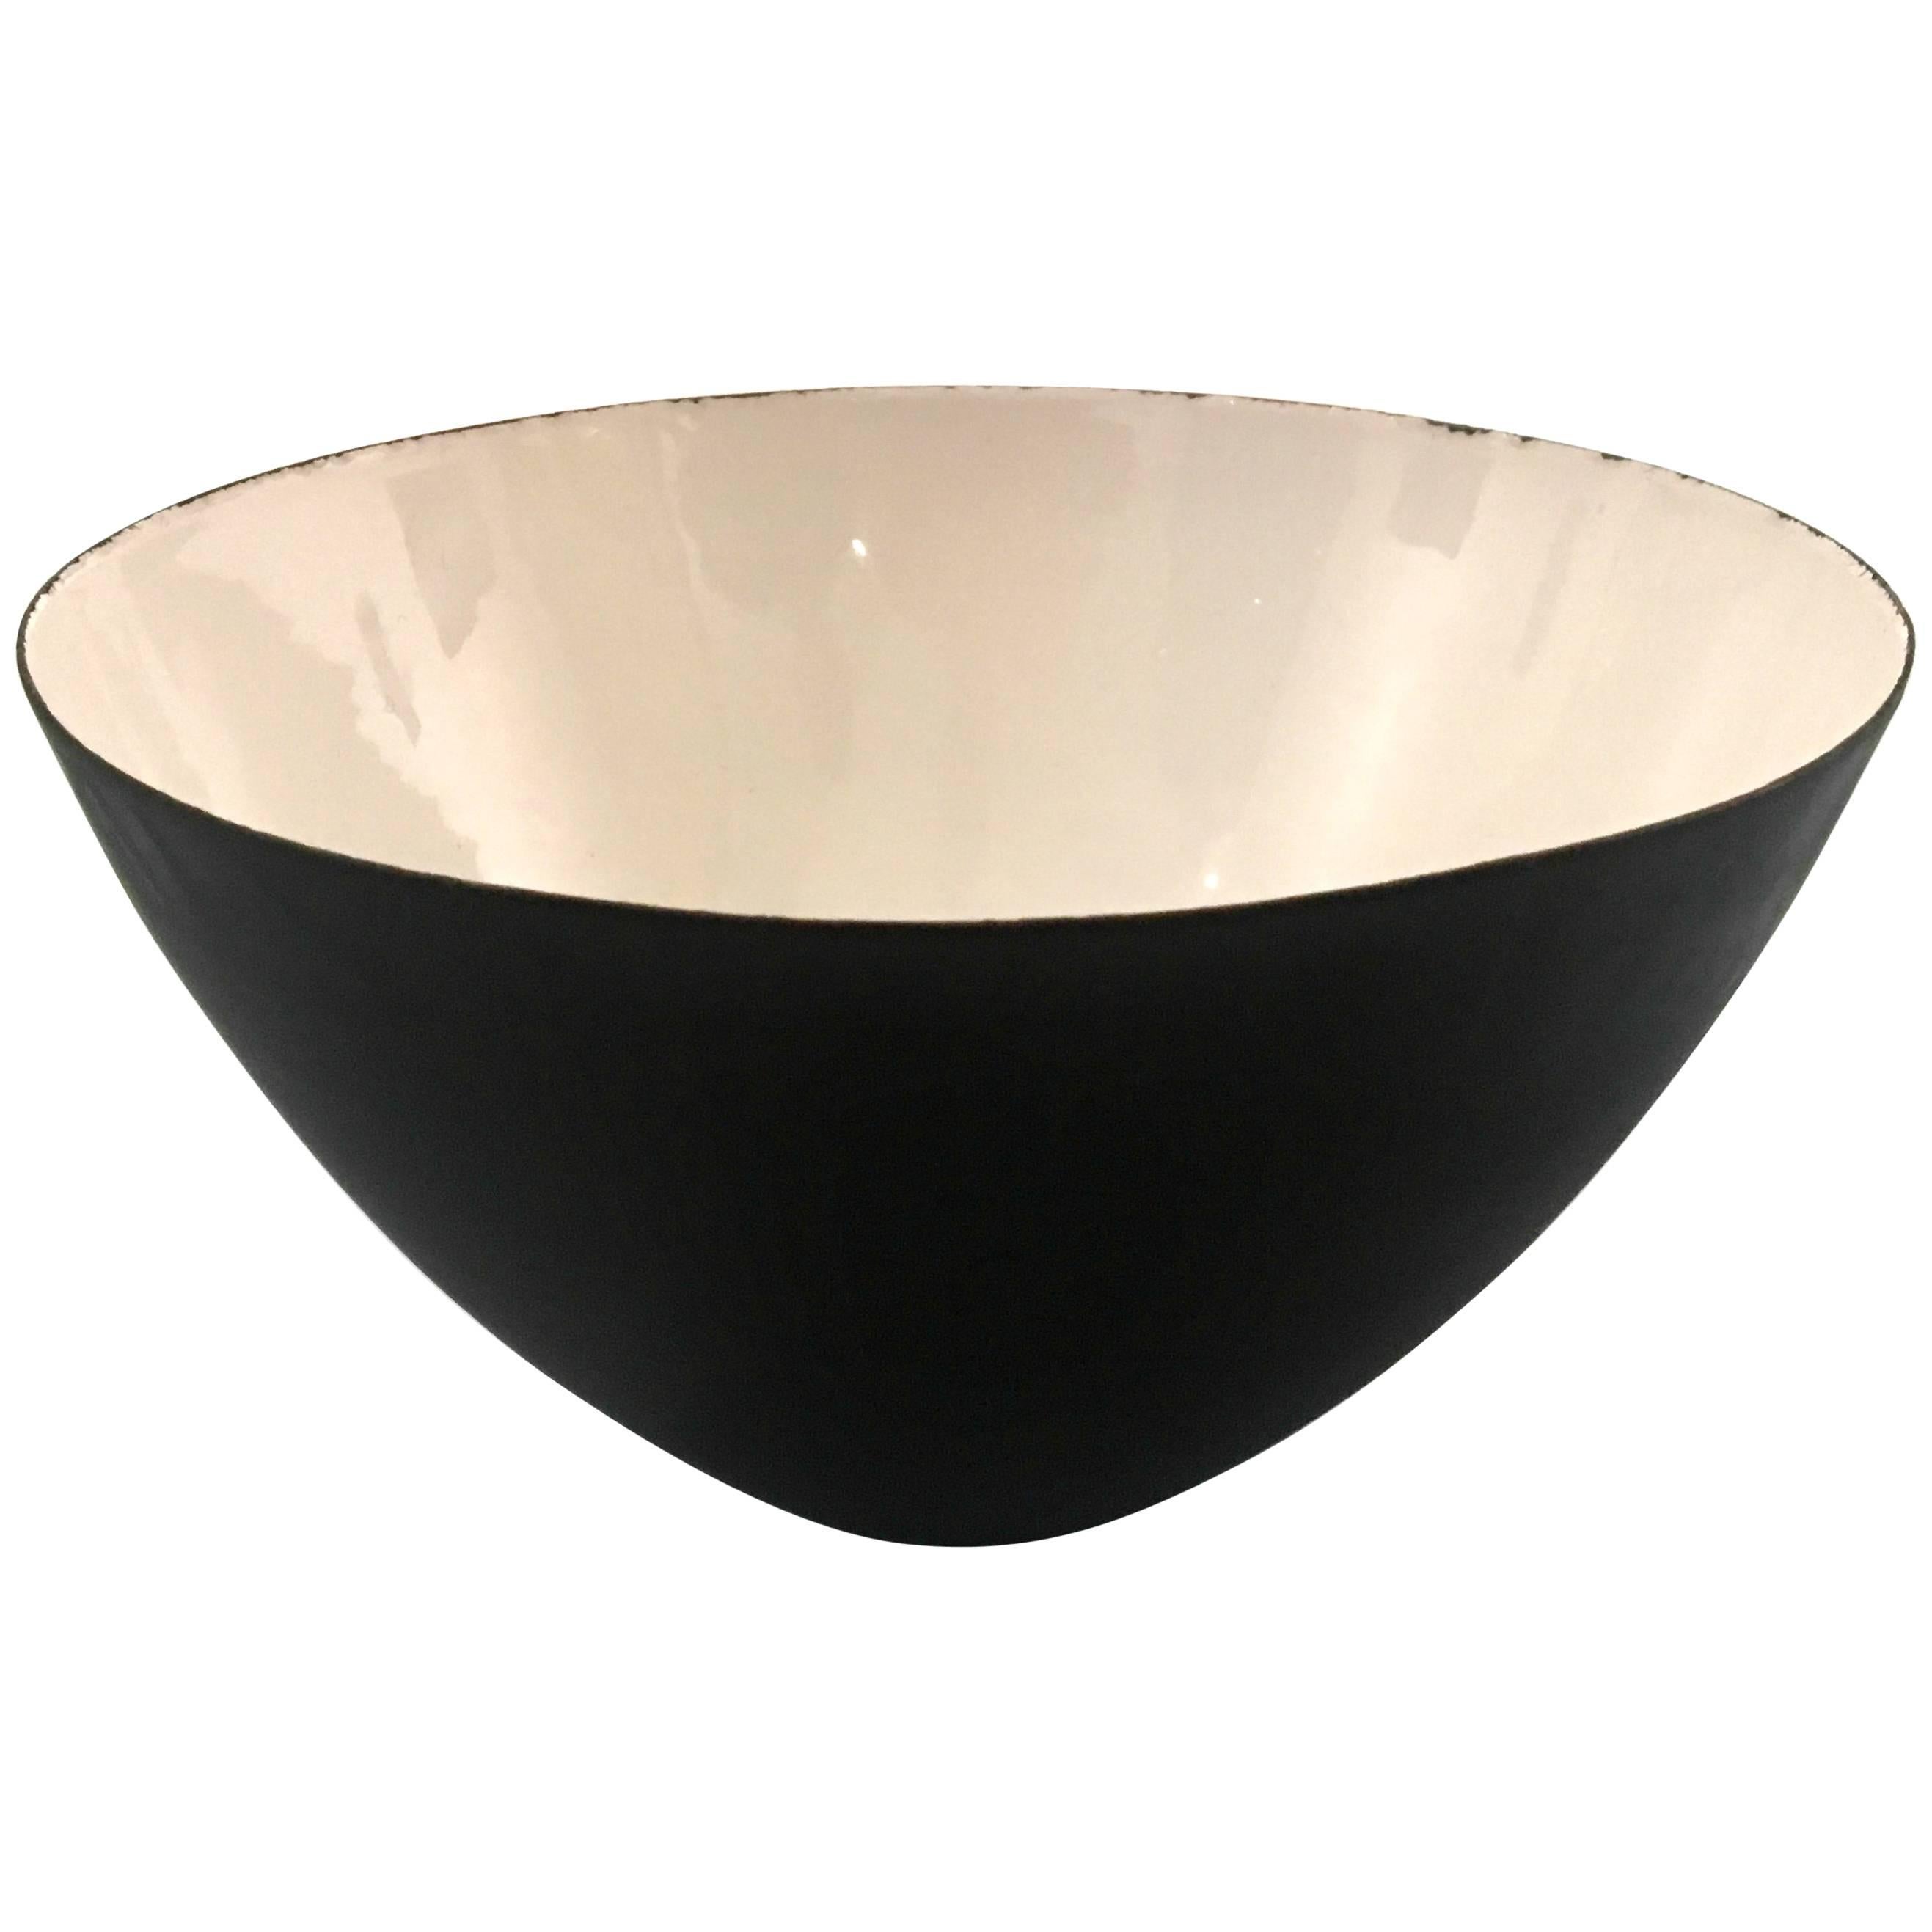 Large Krenit Bowl in Black and White Enamel Early Production, Denmark